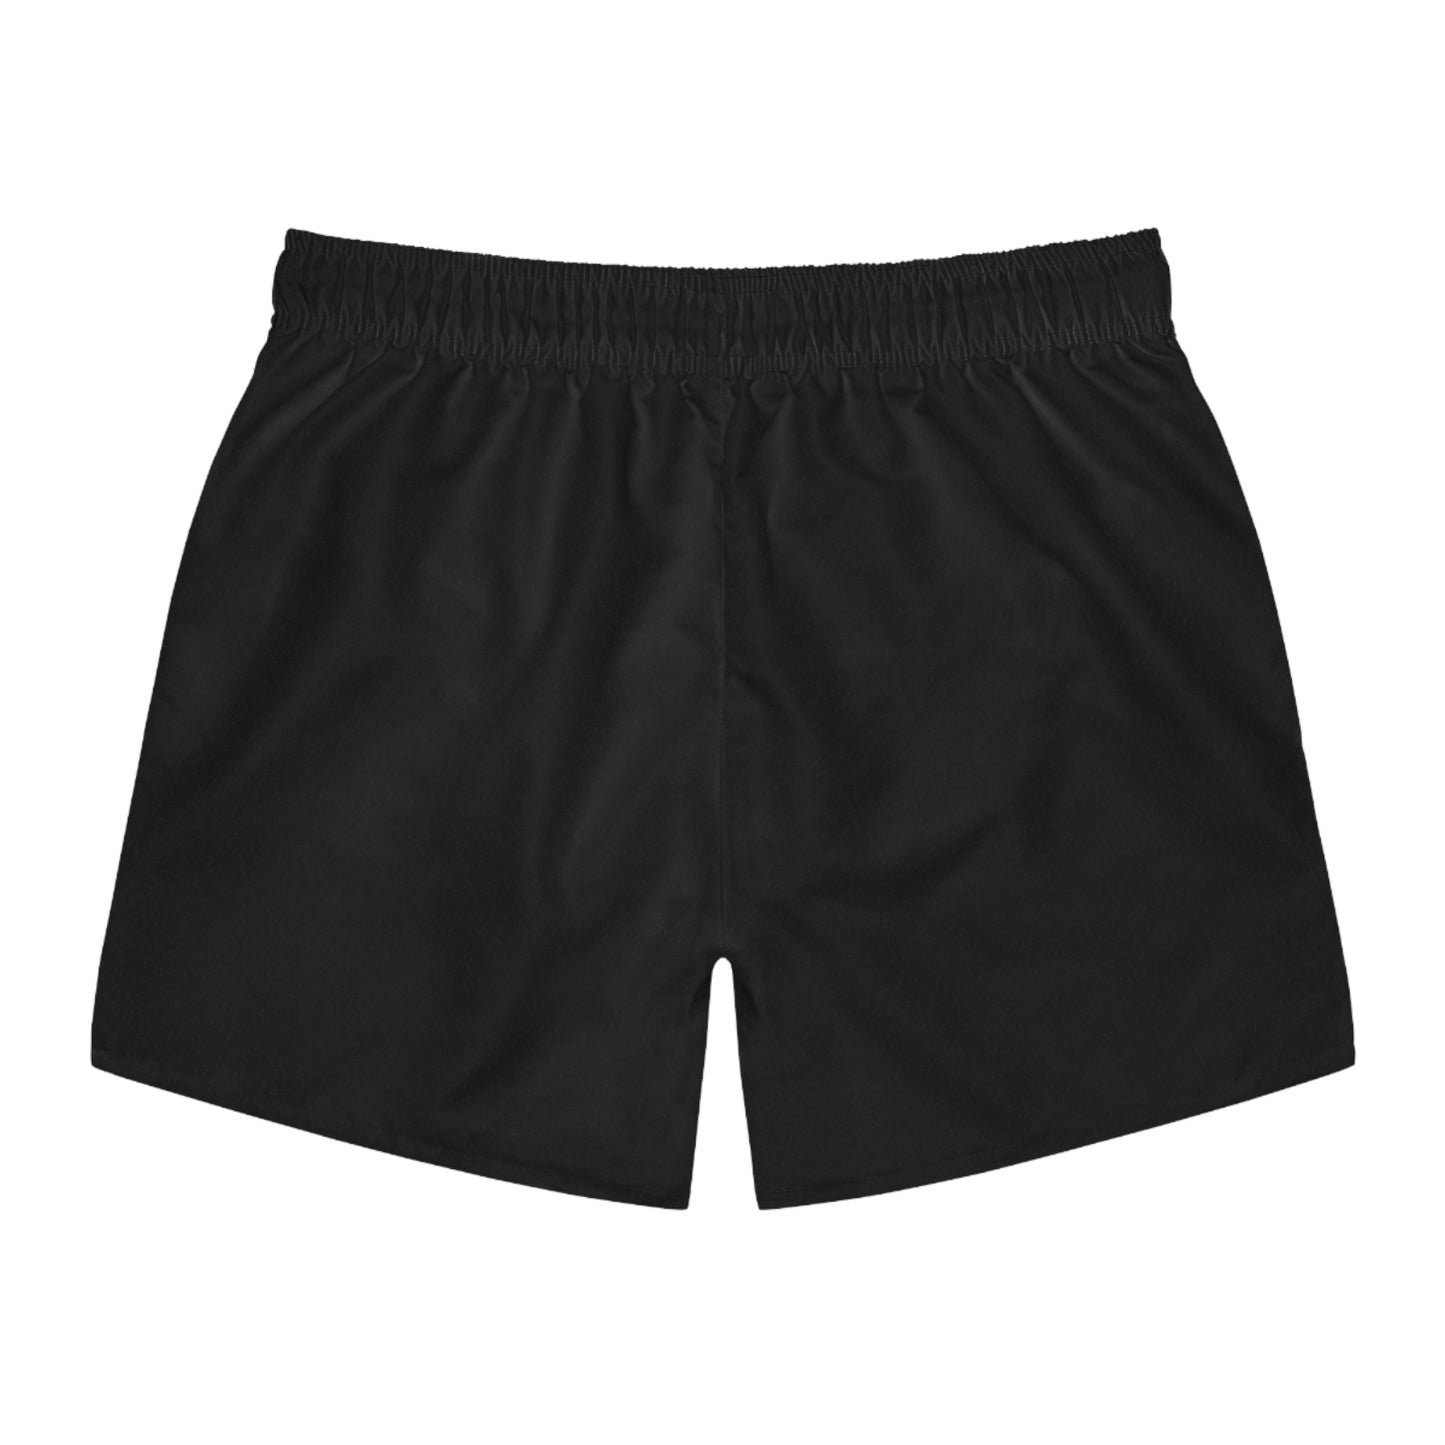 Black Swim Trunks (AOP), Drawstring Waist, Fast-Drying Fabric, Sizes XS to 3XL